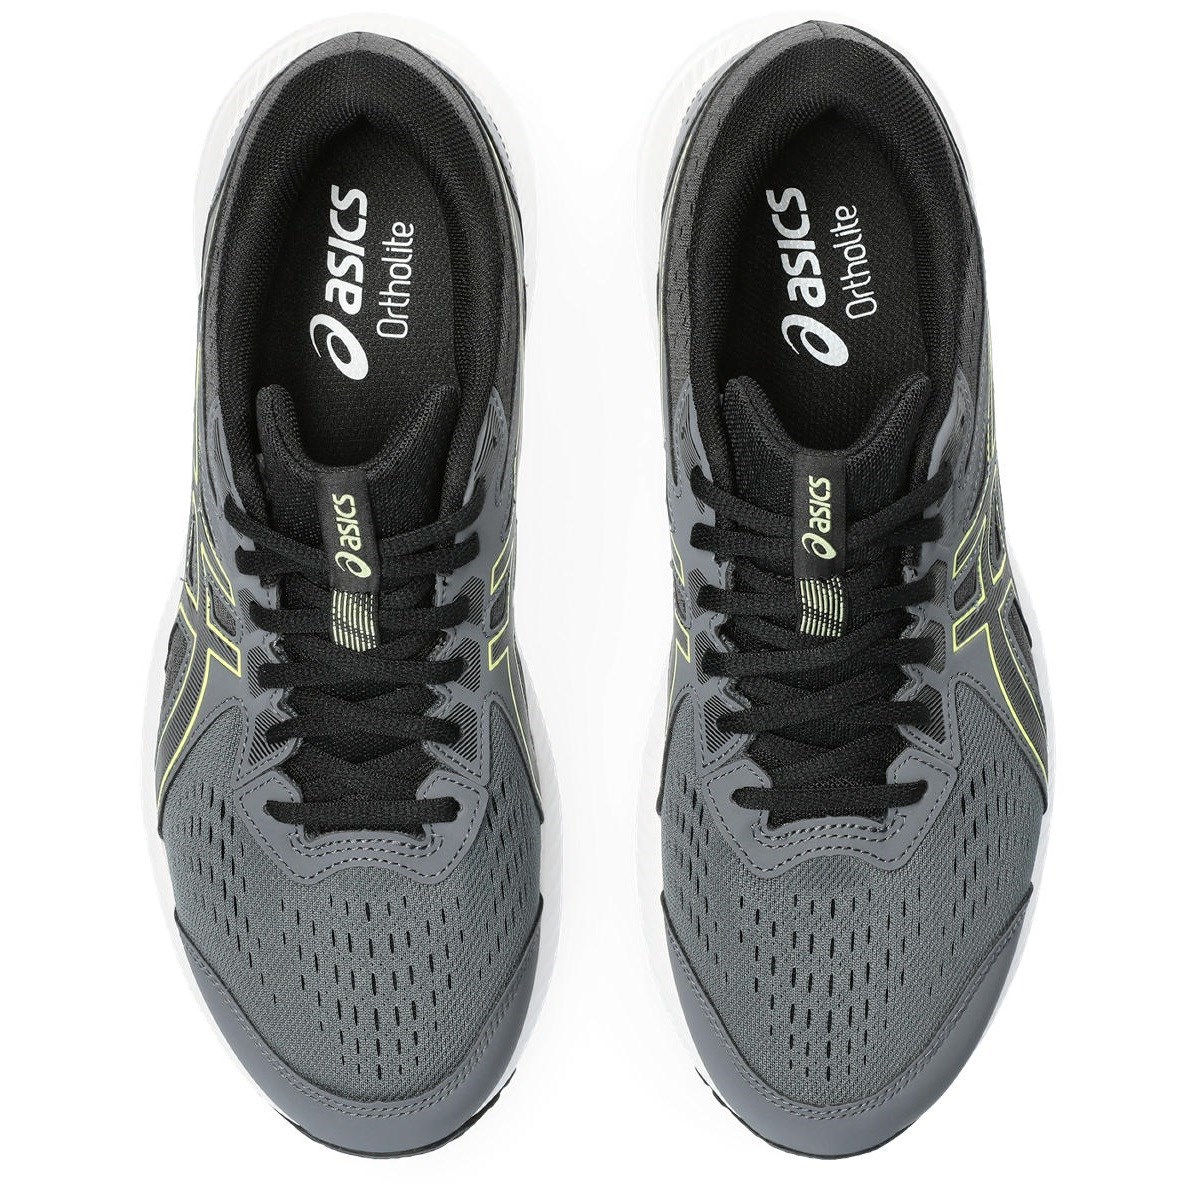 Asics Gel Contend 8 - Mens Running Shoes - Carrier Grey/Black | Sportitude